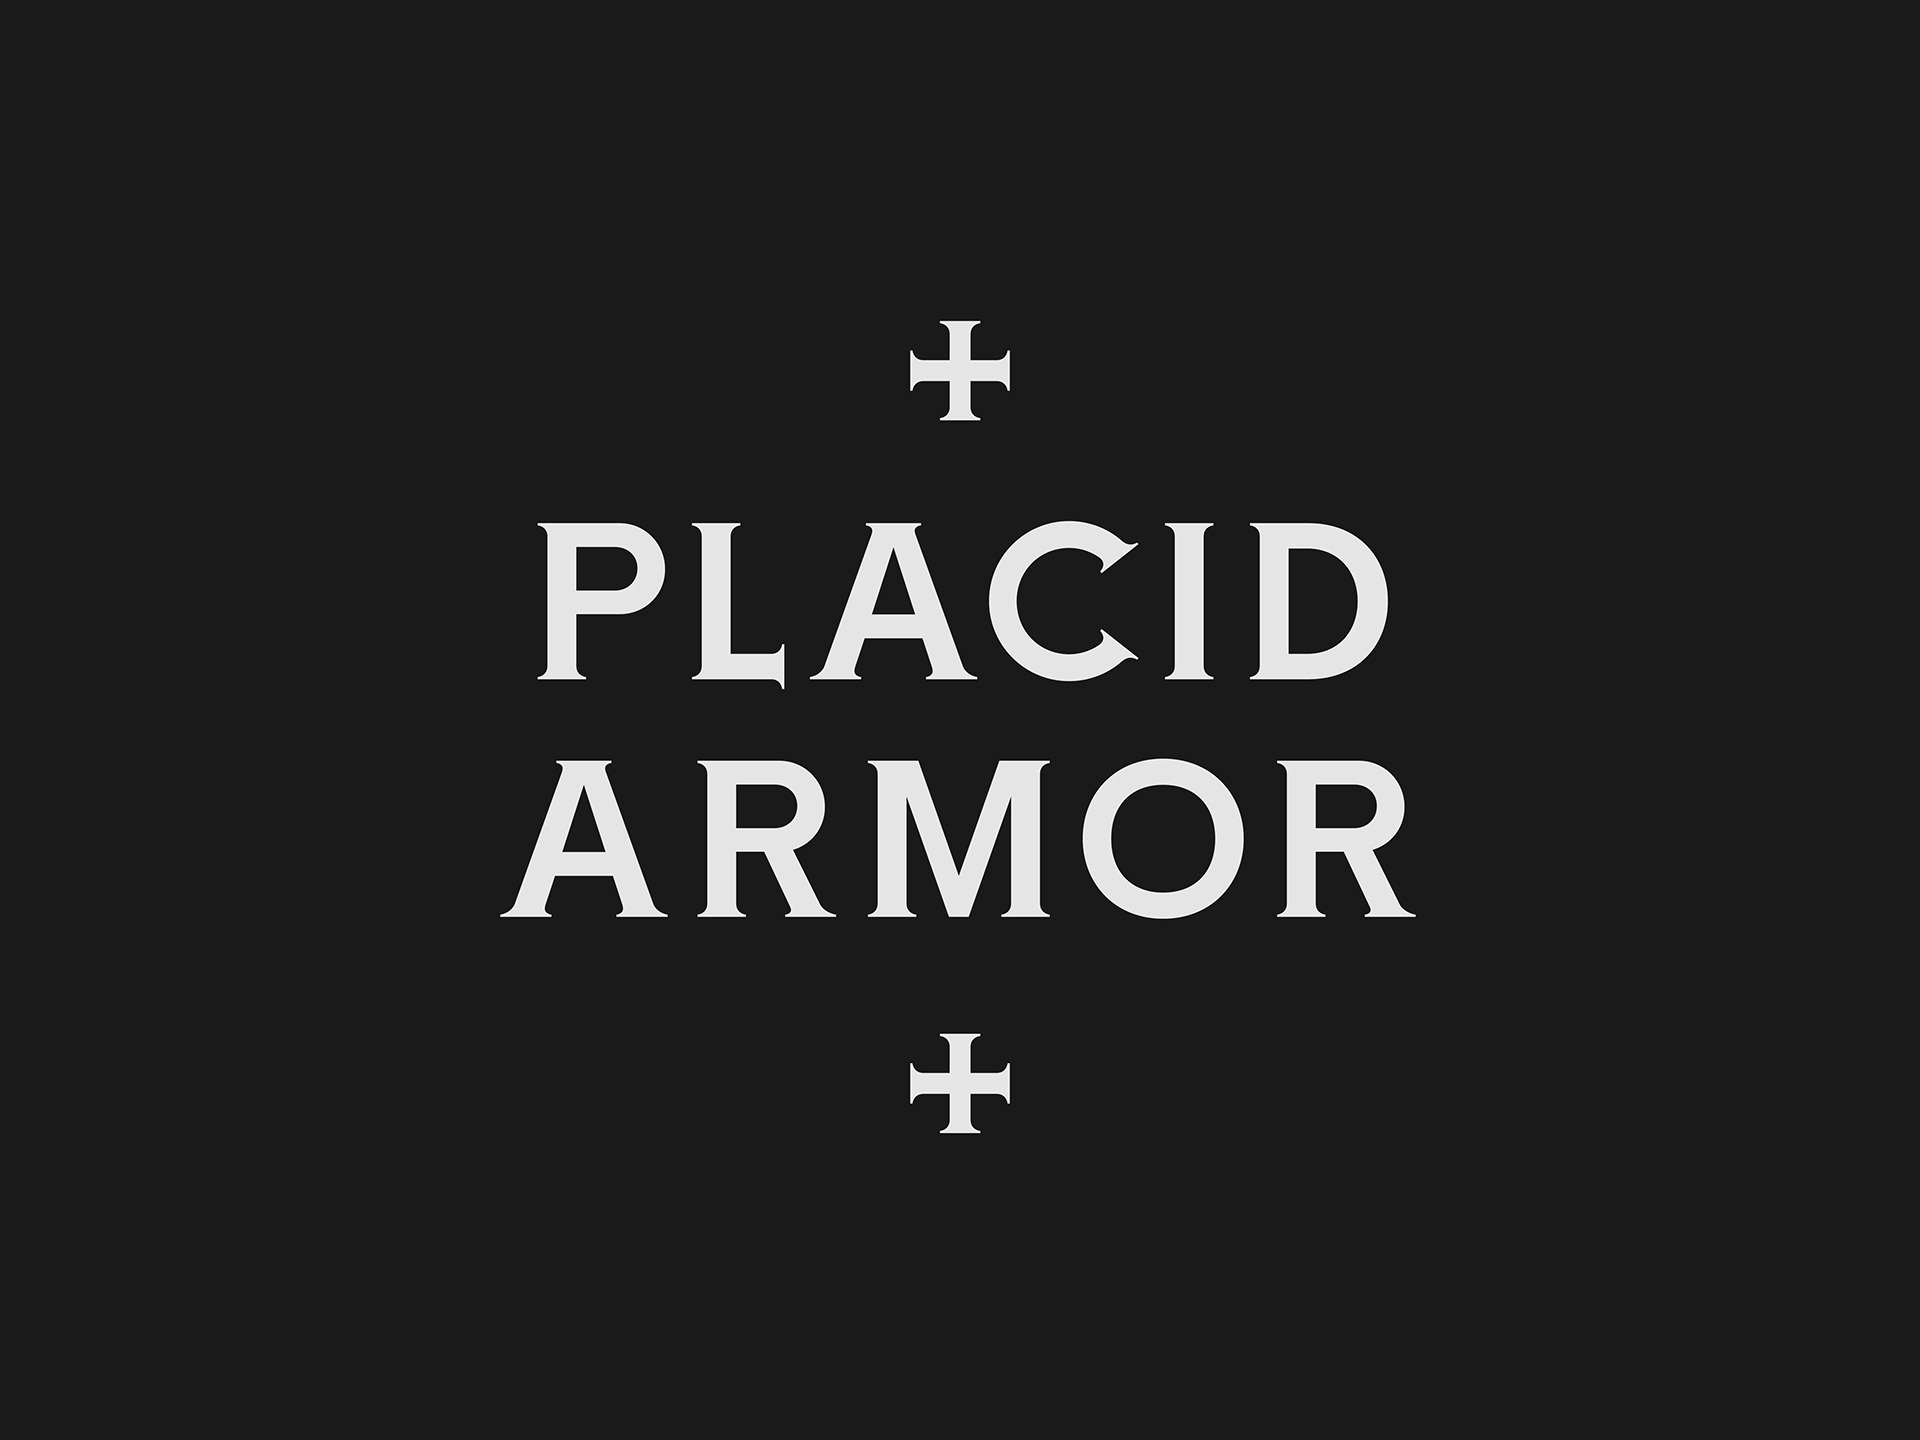 Police Placid Armor